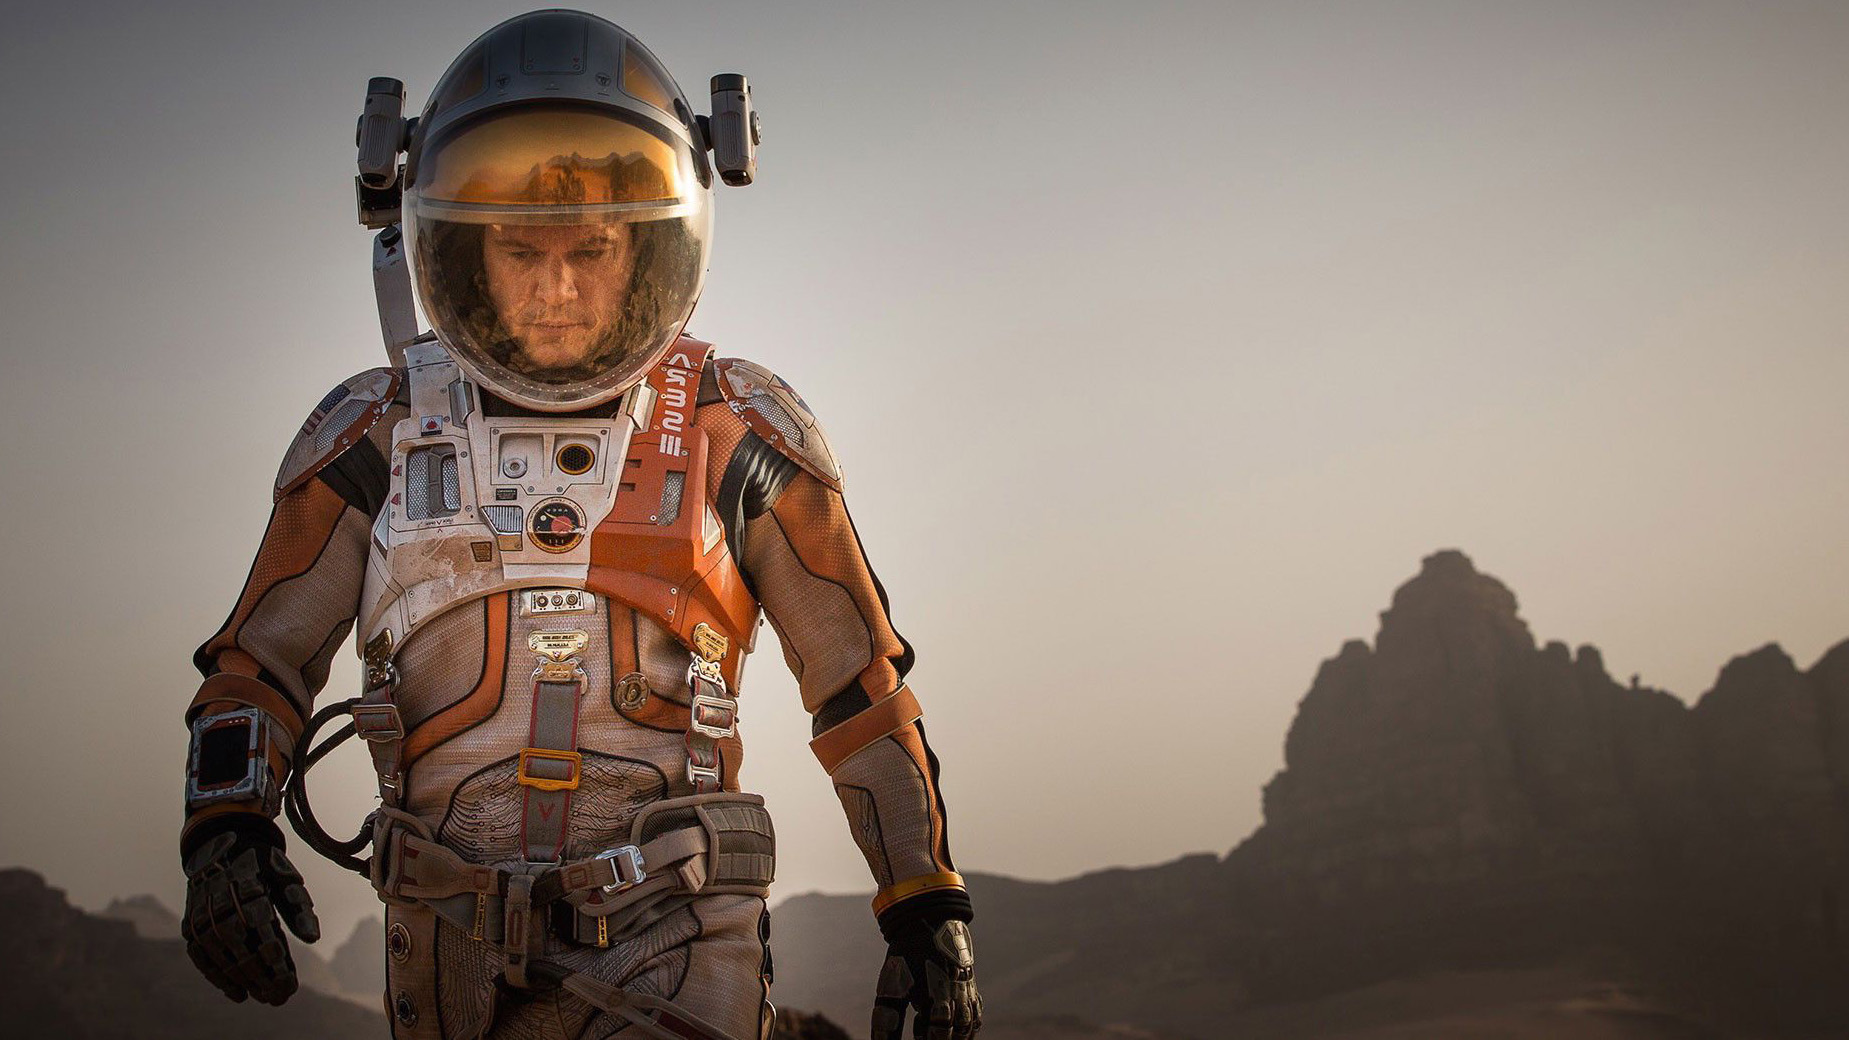 Best Netflix sci-fi movies: The Martian